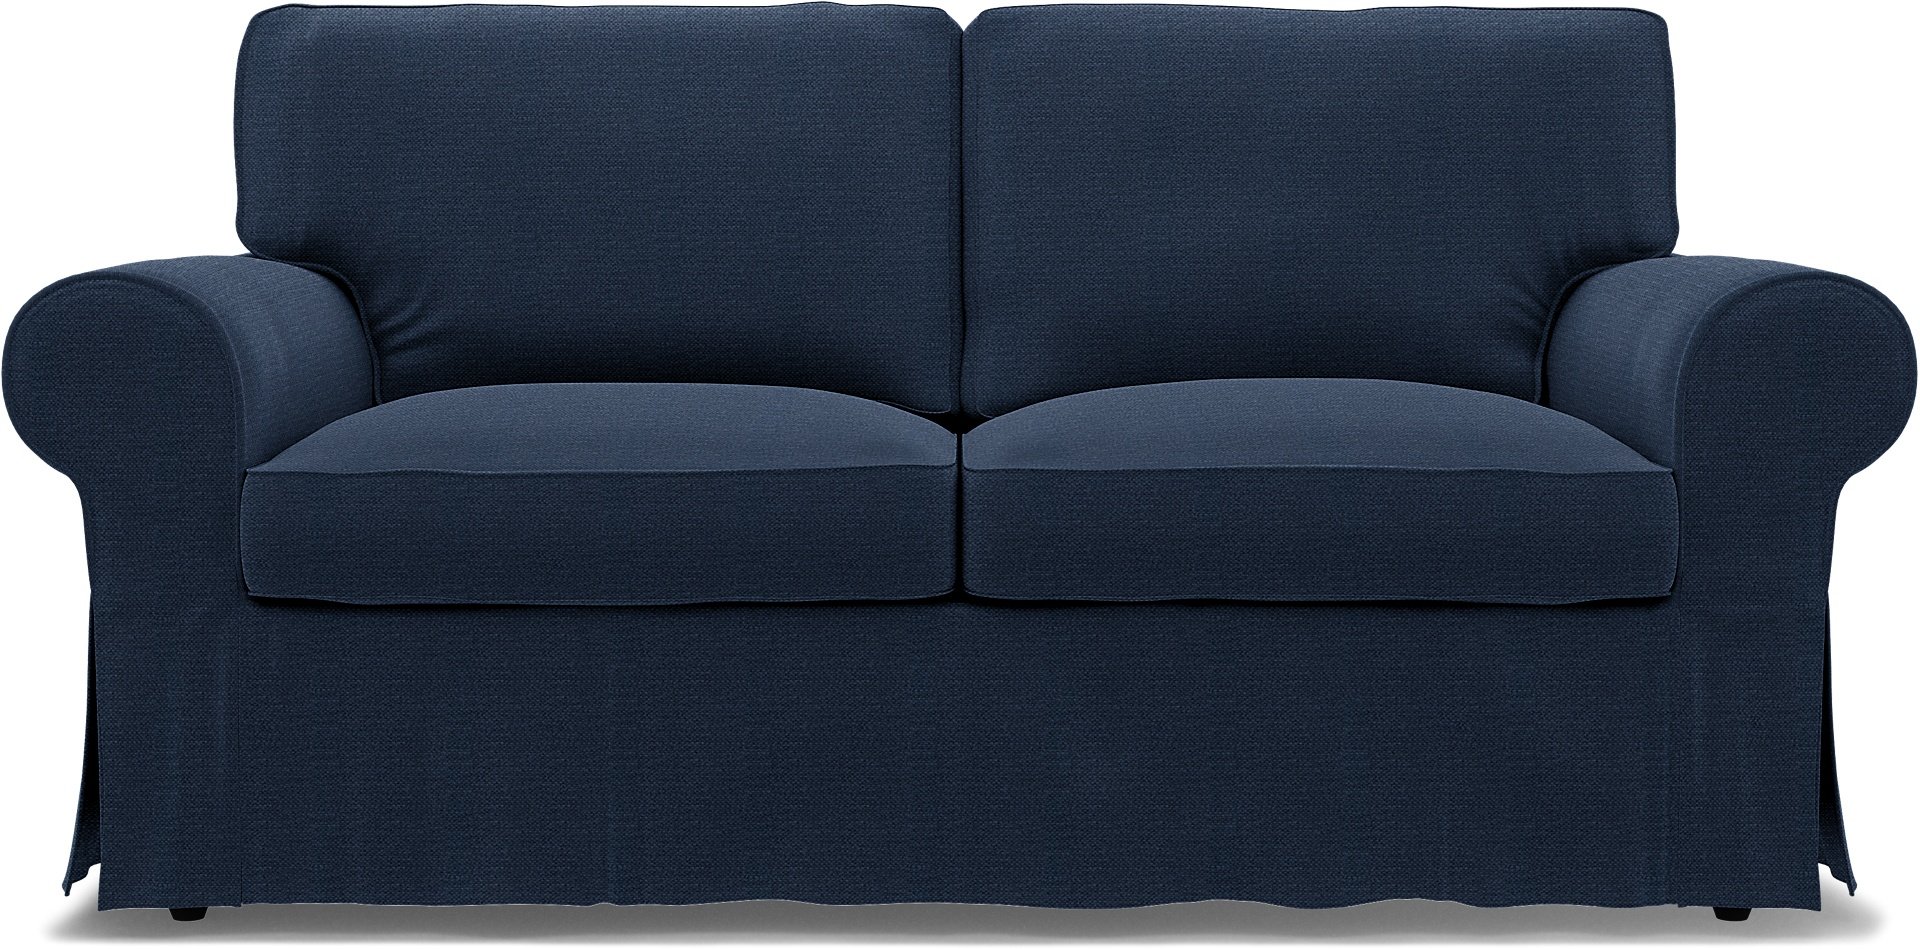 IKEA - Ektorp 2 Seater Sofa Bed Cover, Navy Blue, Linen - Bemz